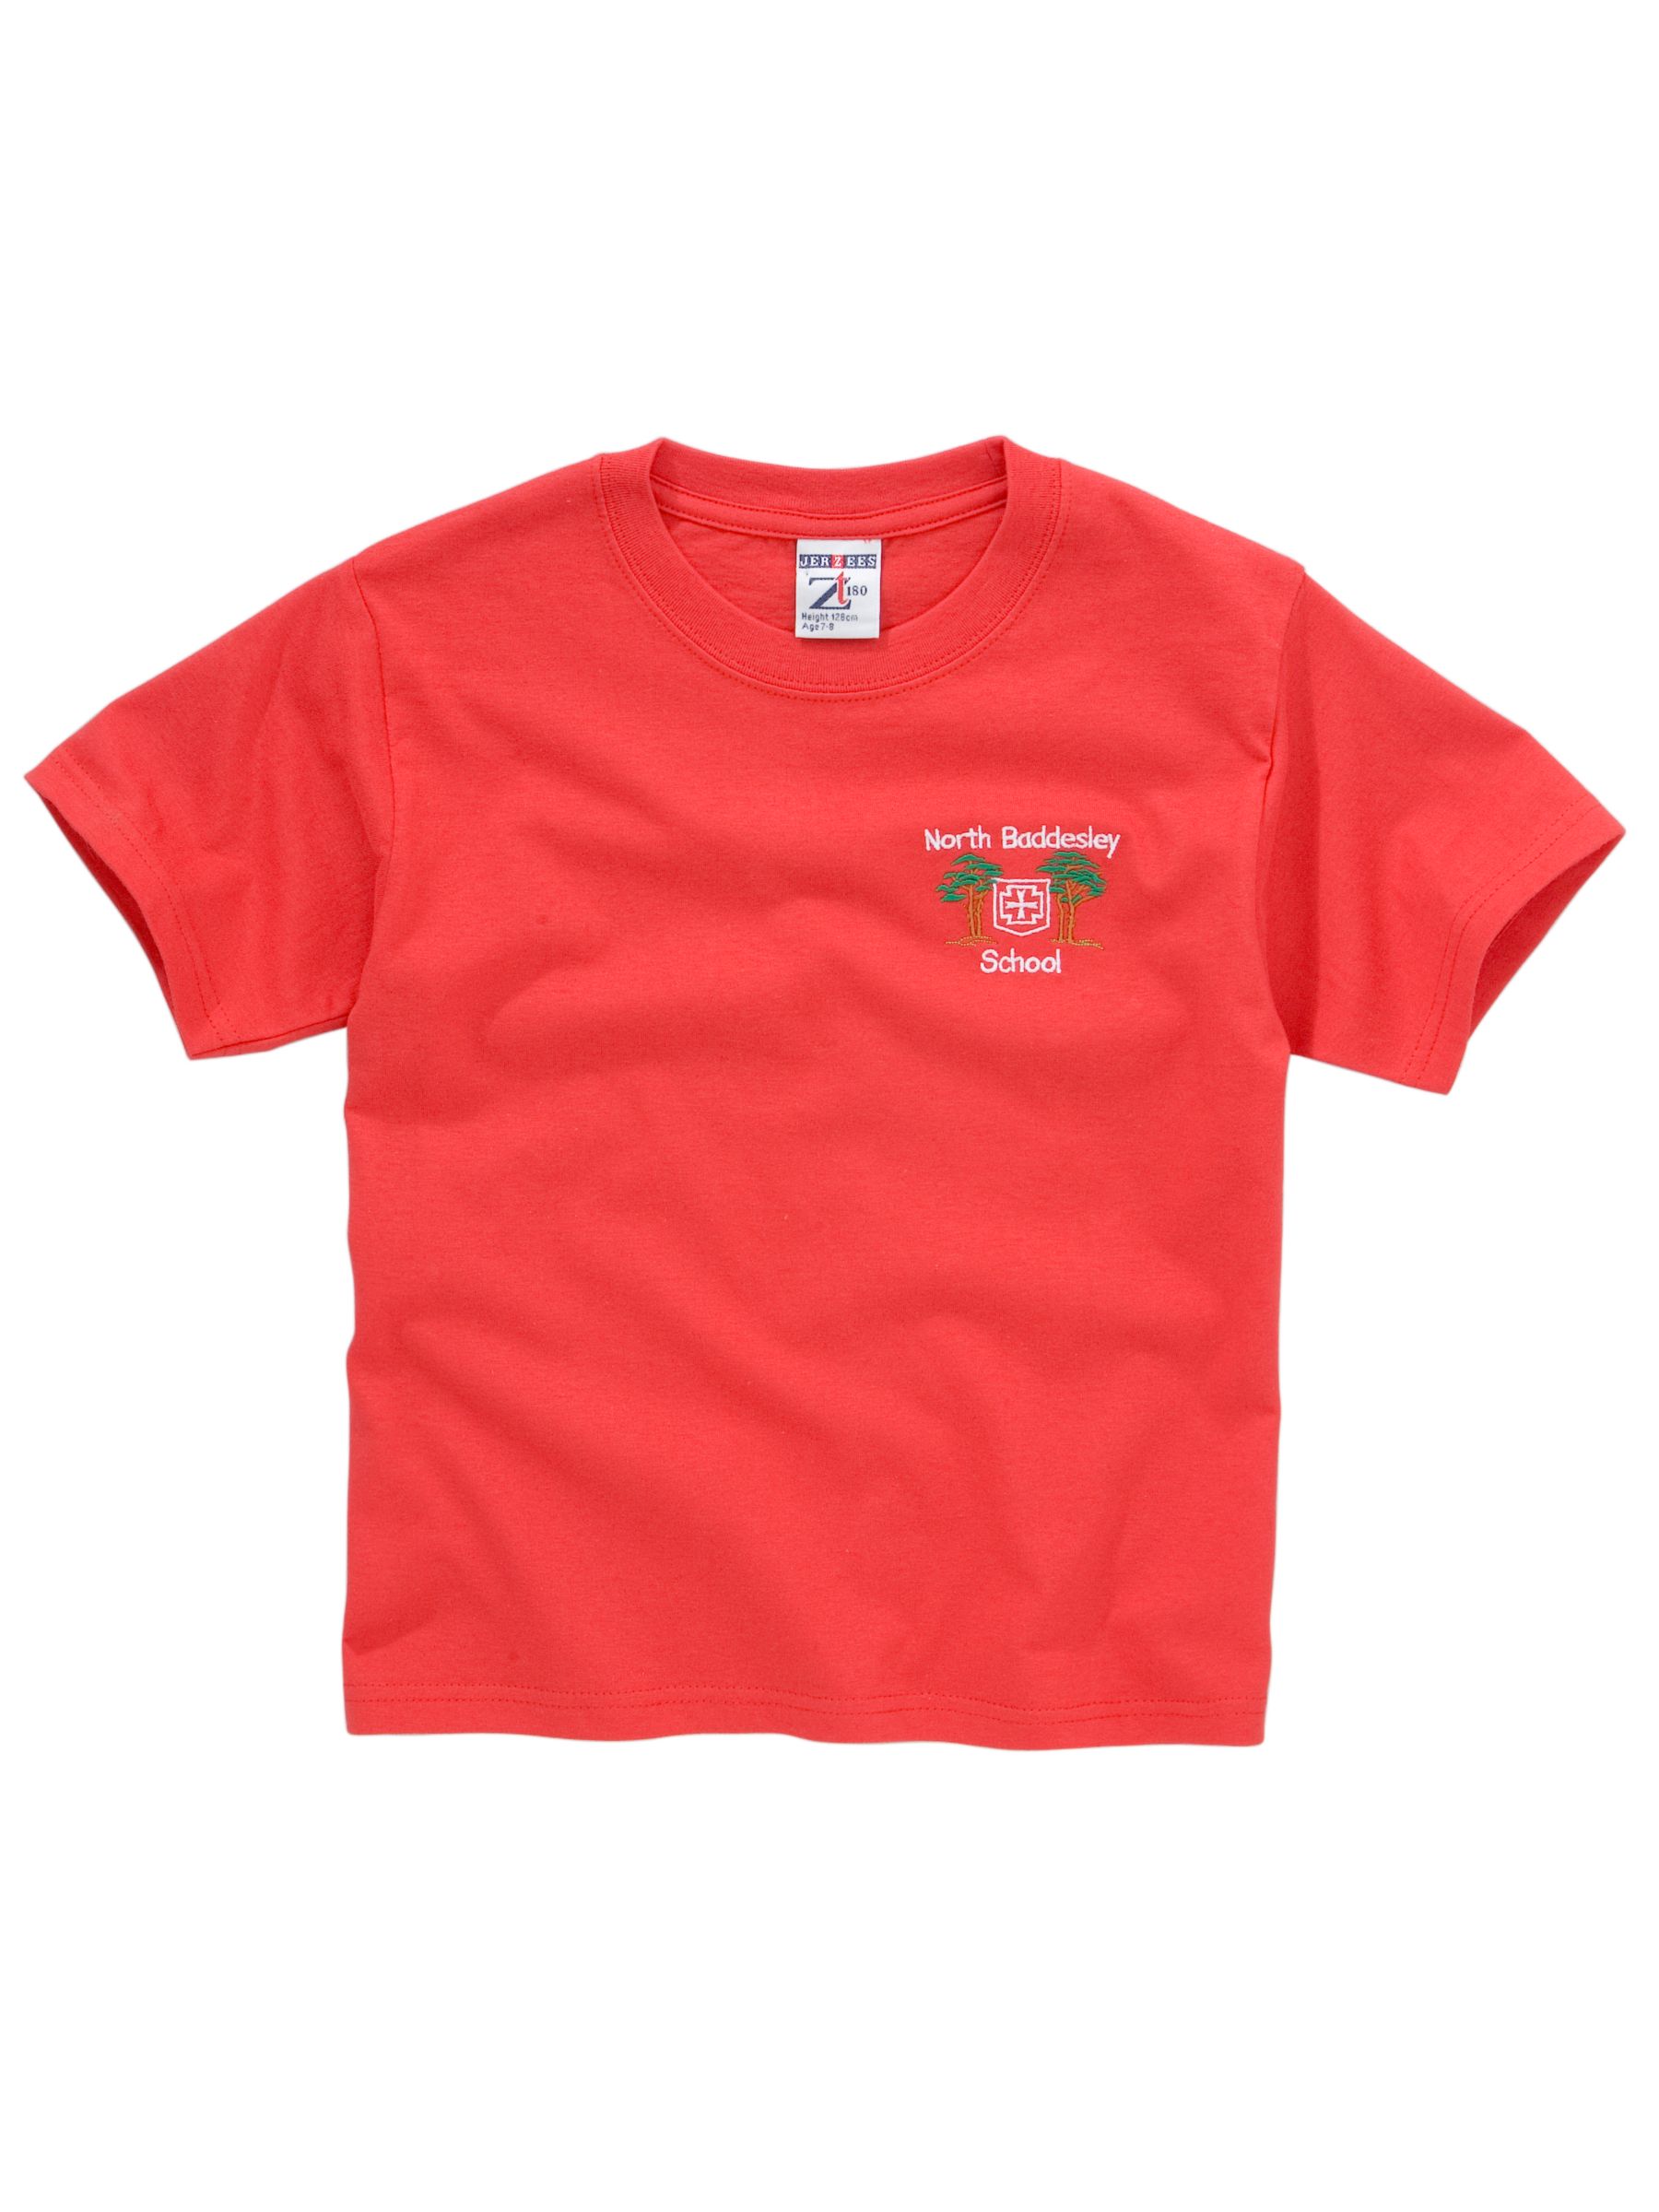 North Baddesley School North Baddesley Junior School PE T-Shirt, Red